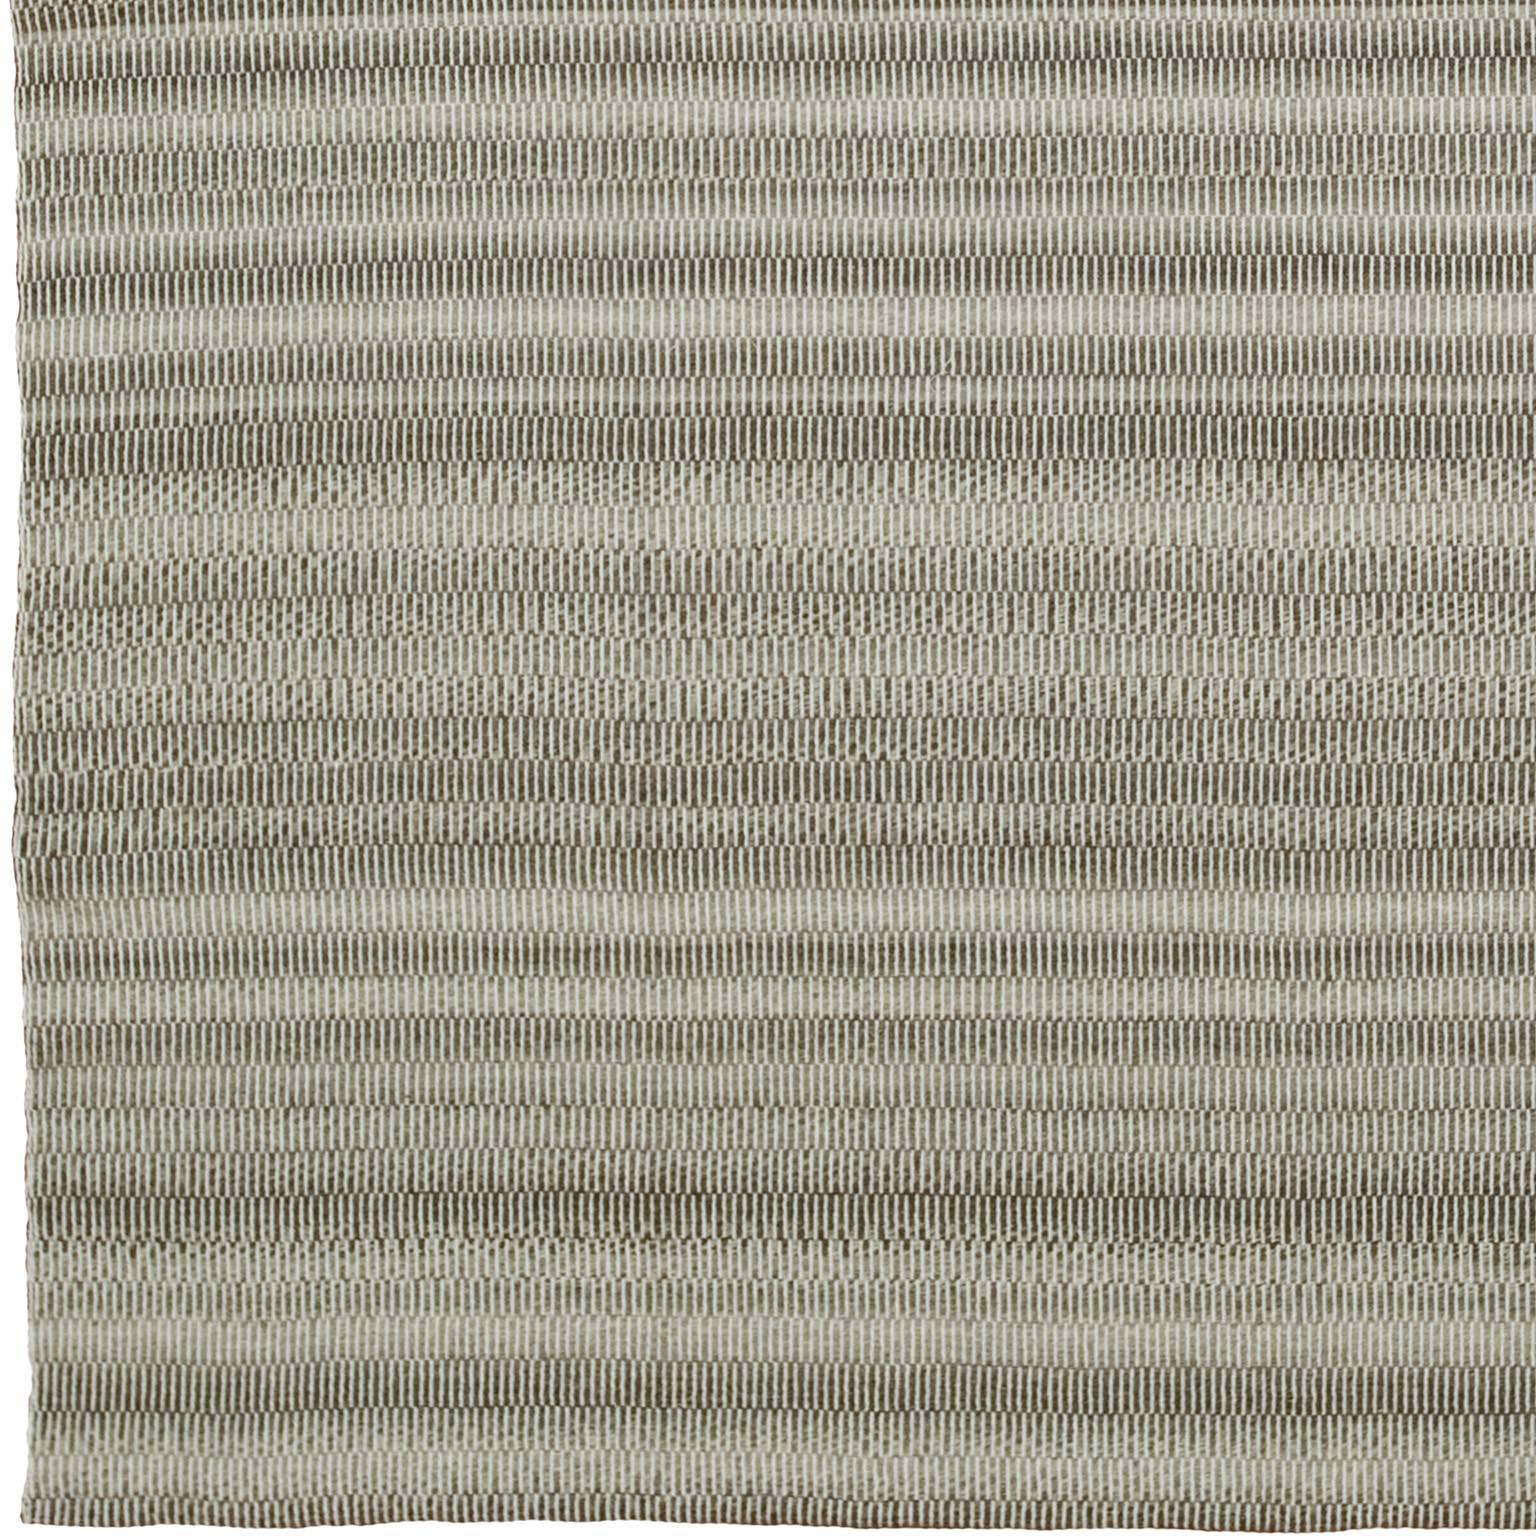 Contemporary Sardinian 'IF-108' Carpet
80% grey melange wool and 20% cotton.
handwoven